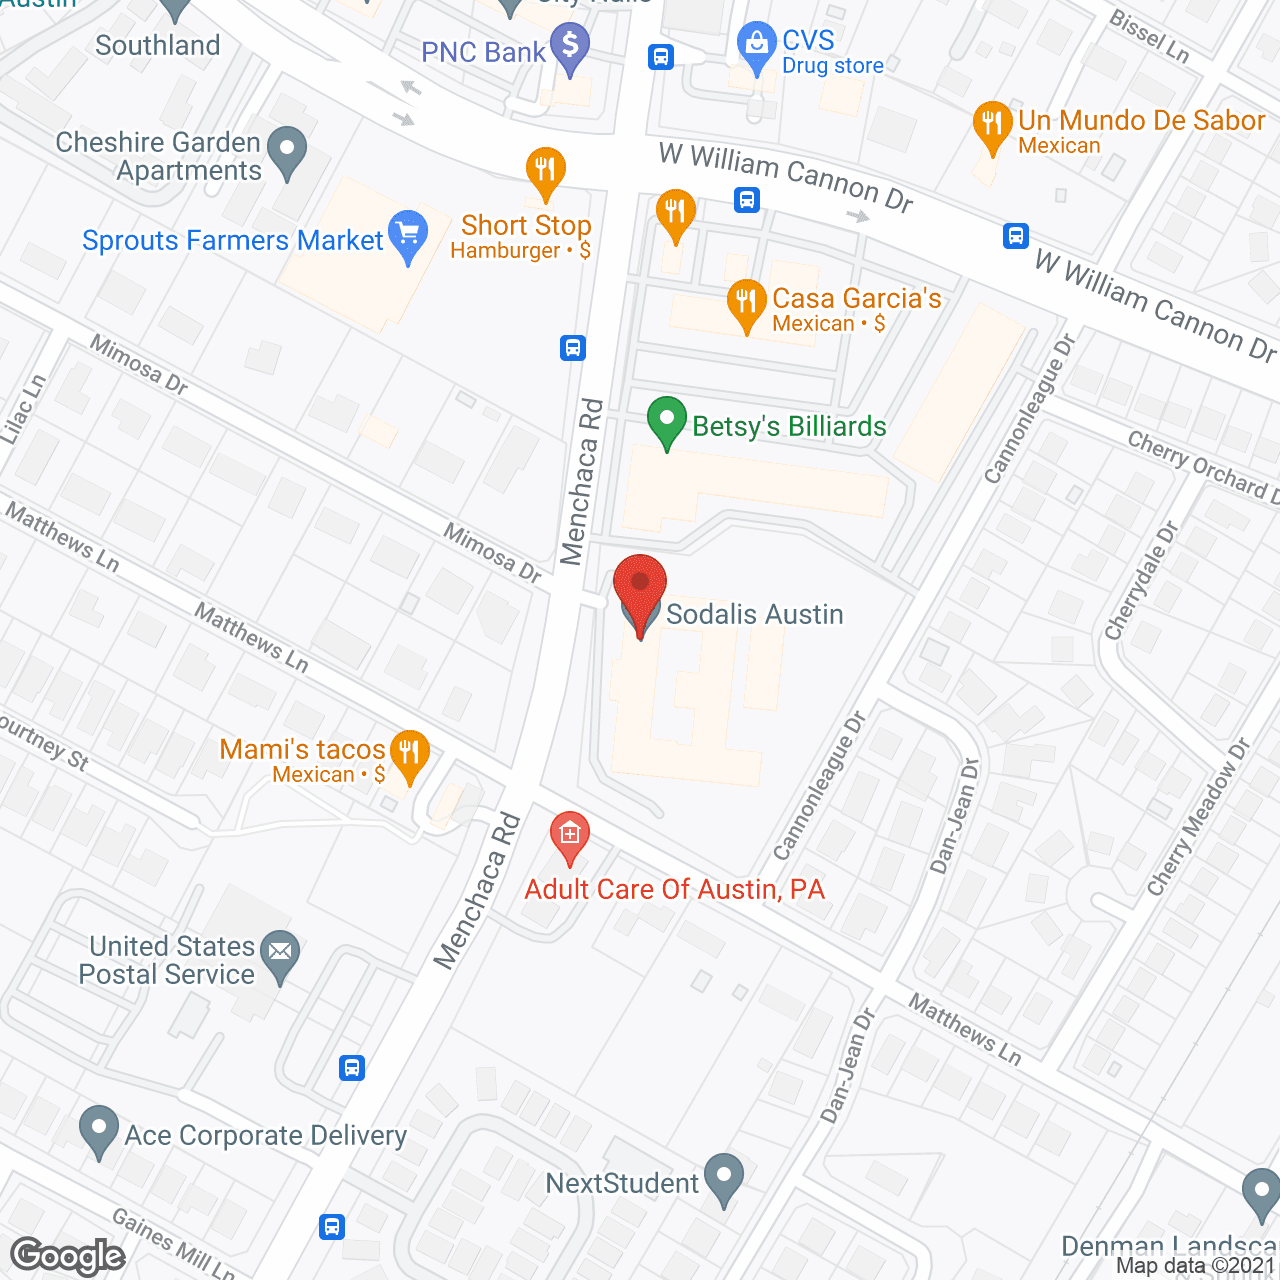 Sodalis Austin in google map